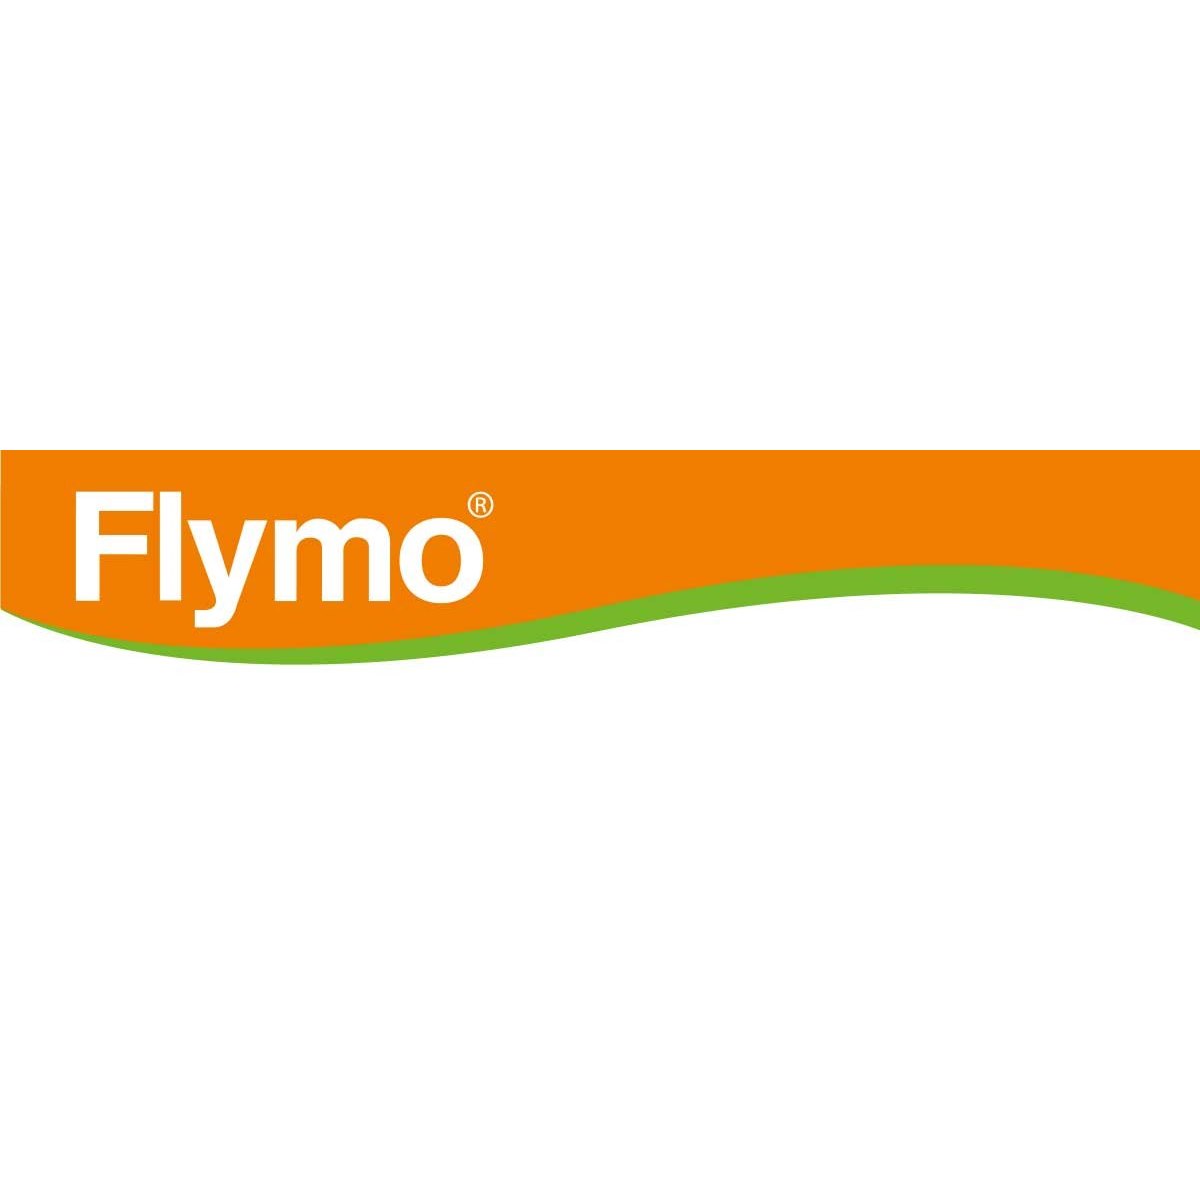 Where to Buy Genuine Flymo Spares